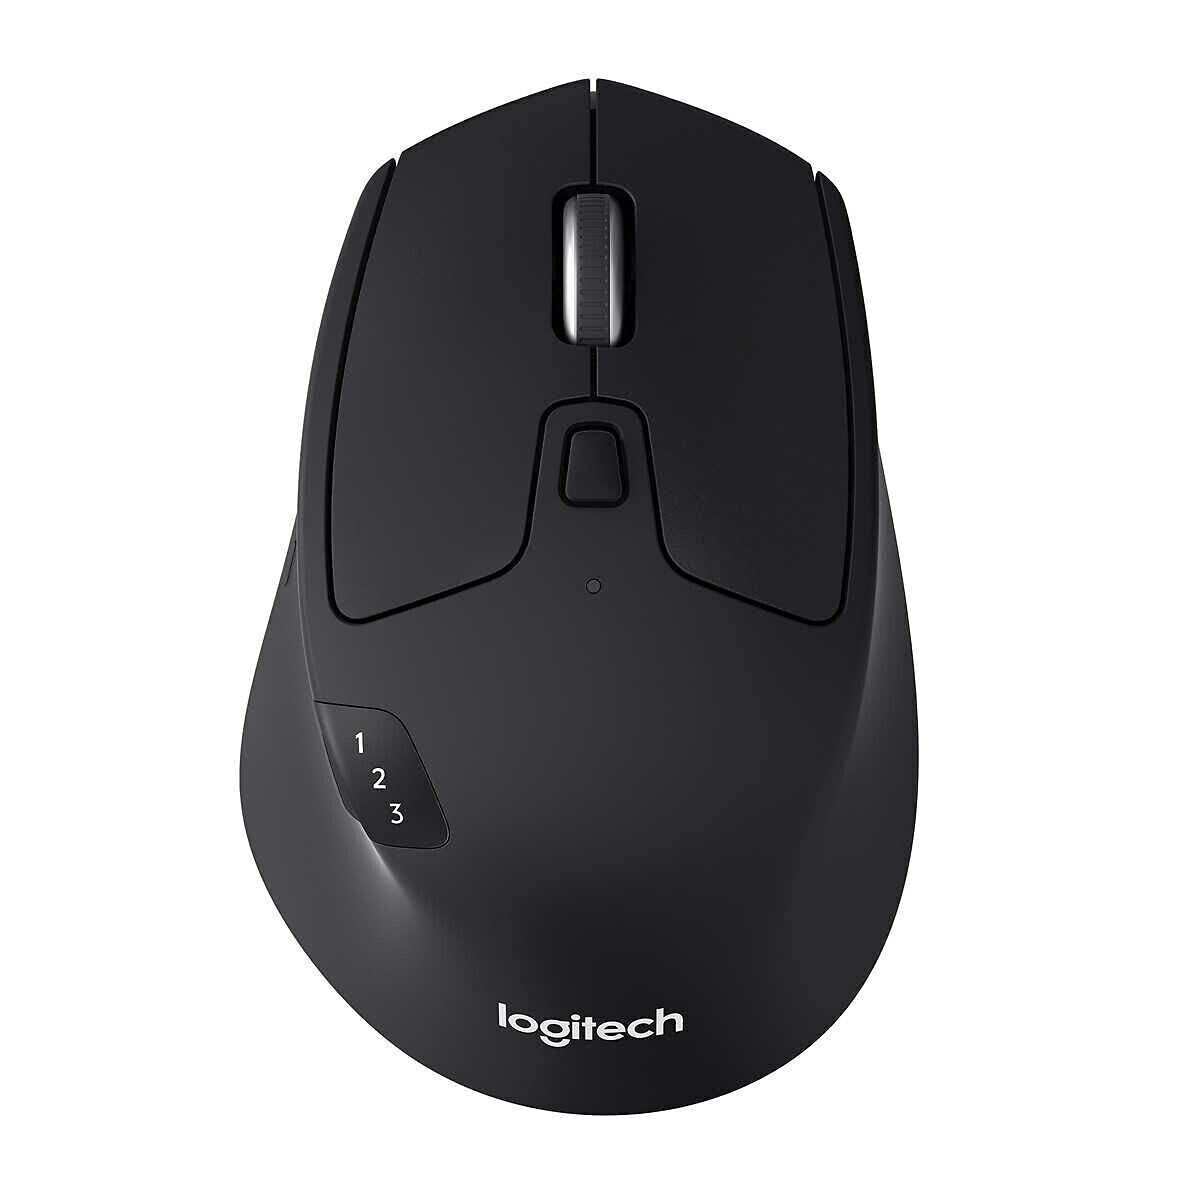 Logitech M720 Multi-Device Wireless Mouse with Hyper-Fast Scrolling - Black